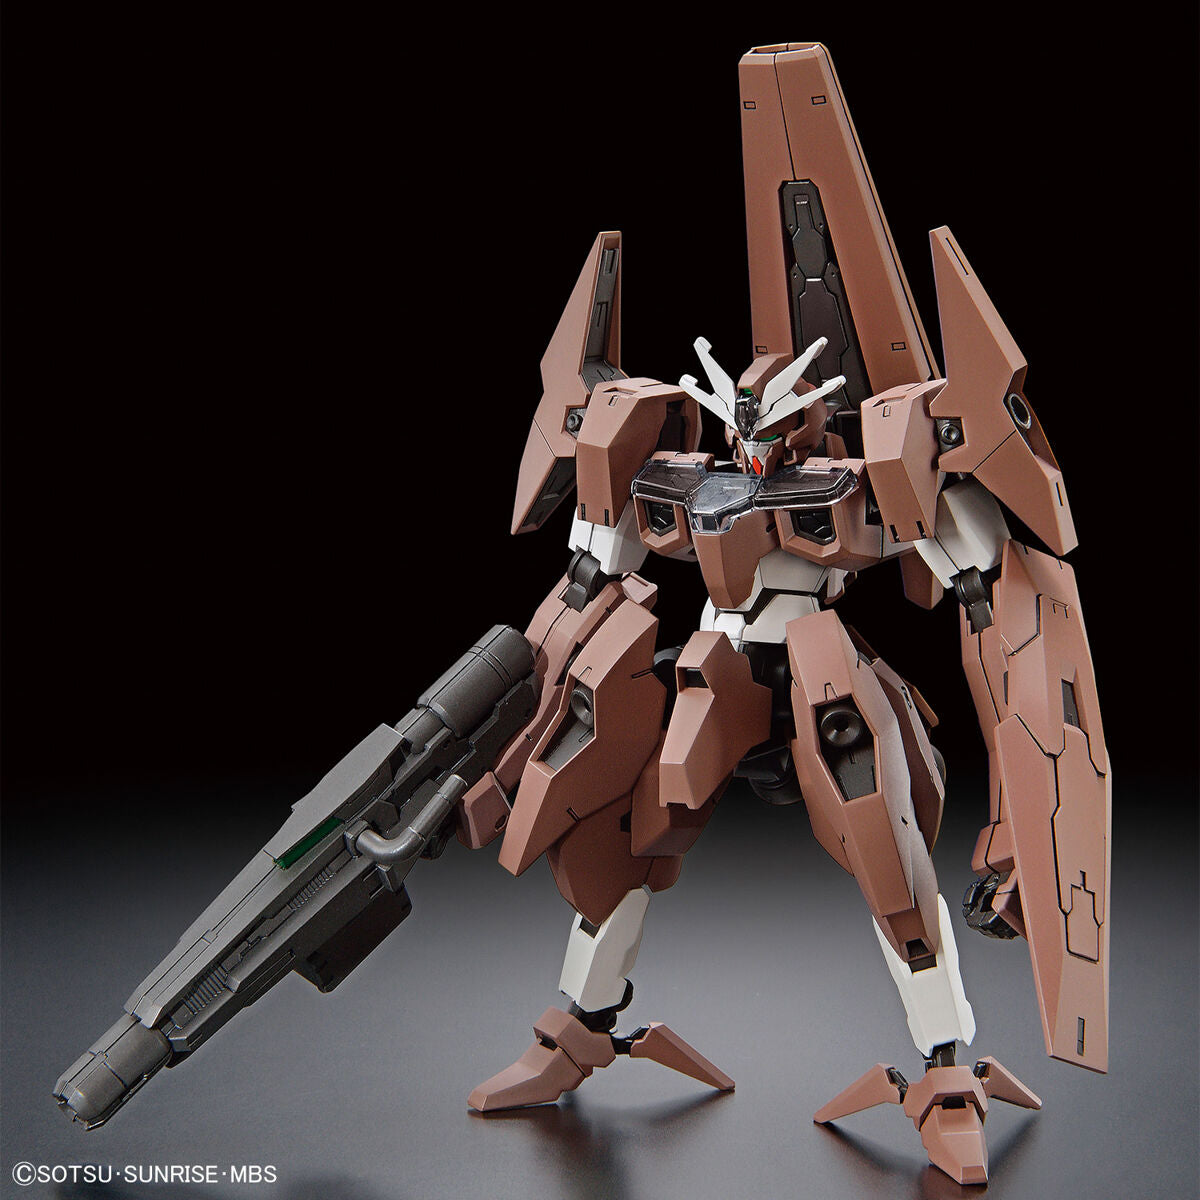 HG Gundam Lfrith Thorn